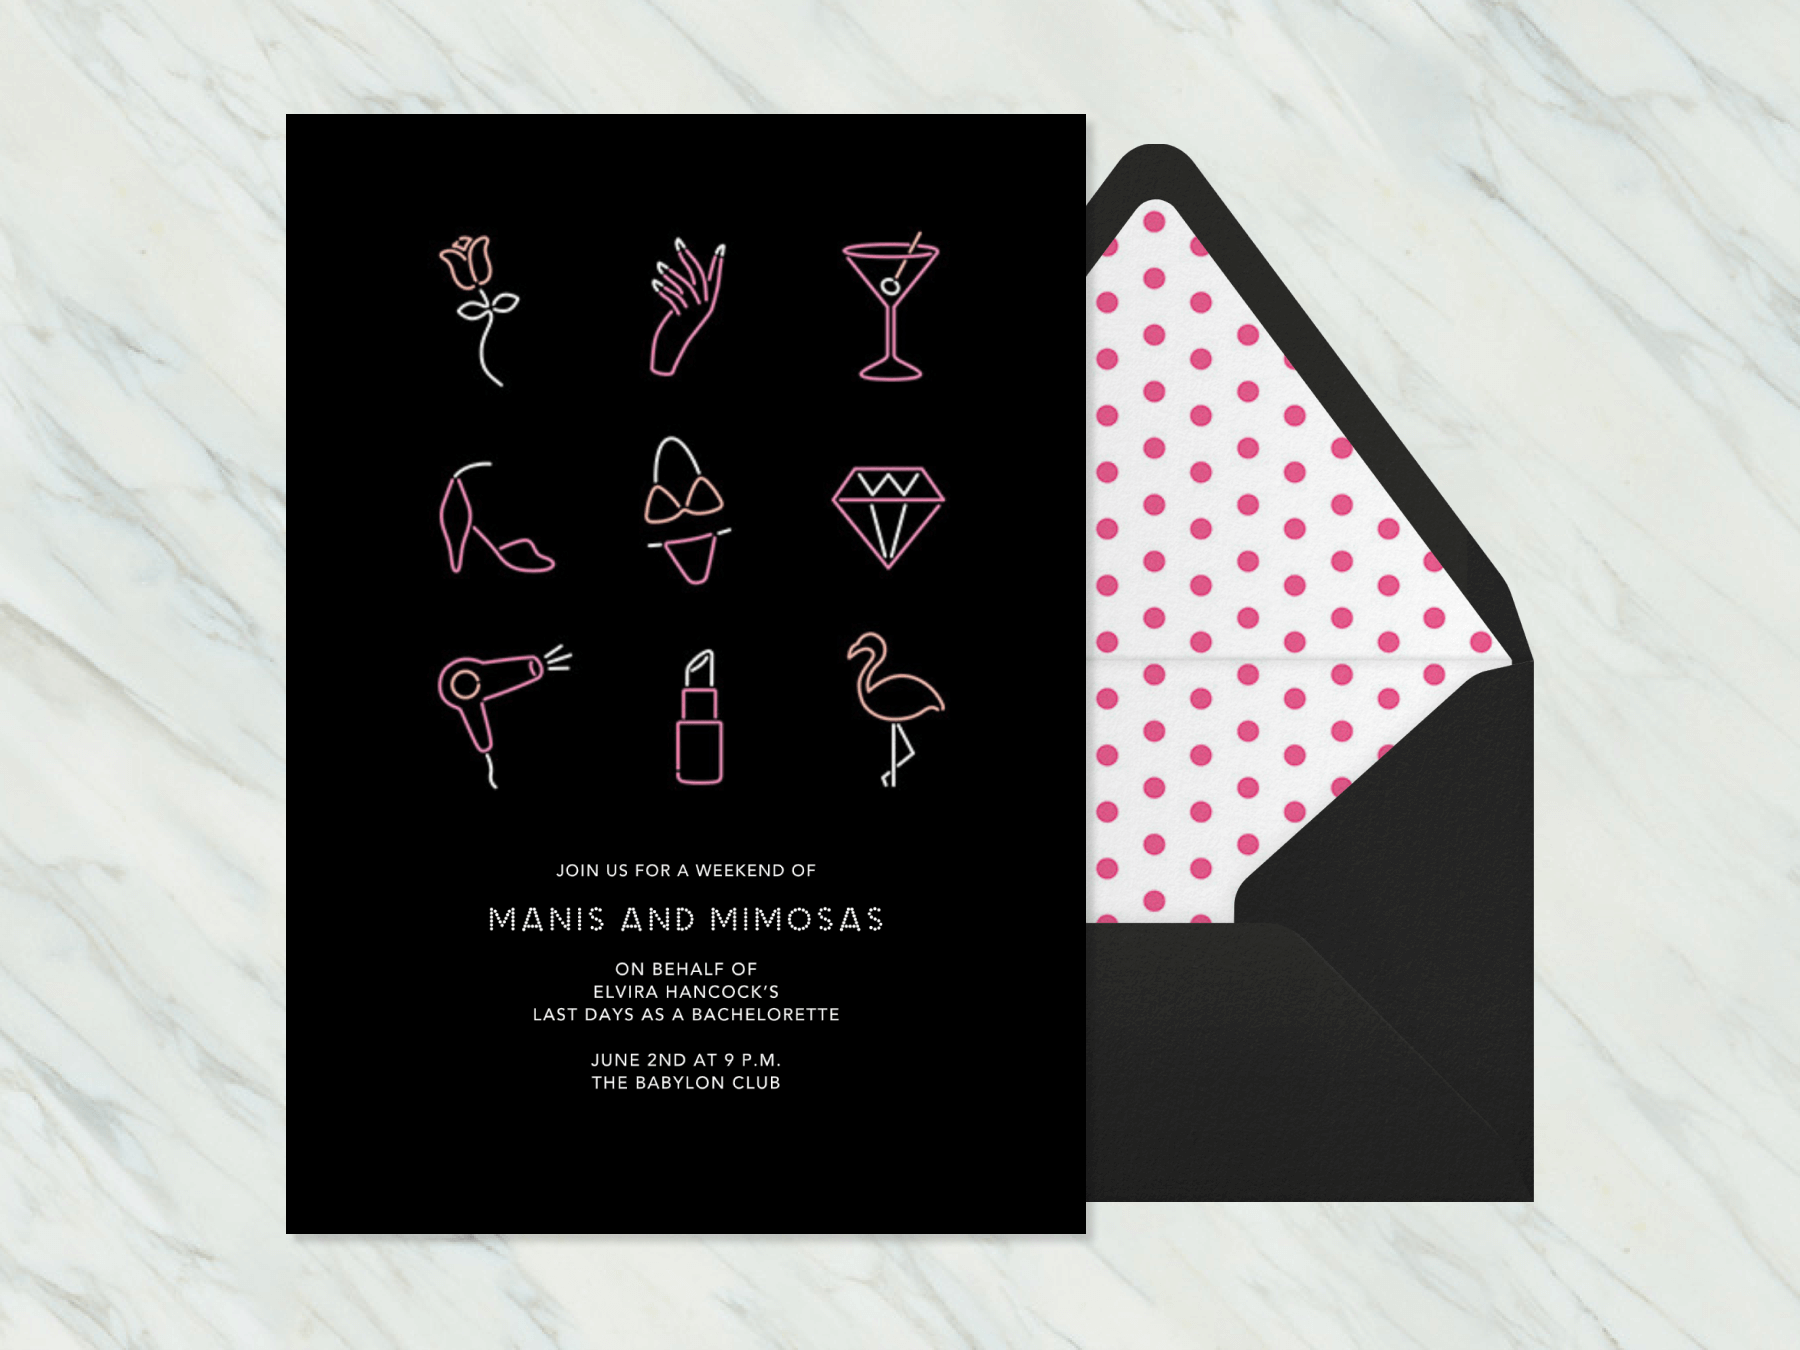 A black bachelorette party invitation with neon light-style illustrations of a bikini, hair dryer, diamond, martini, flamingo, etc.